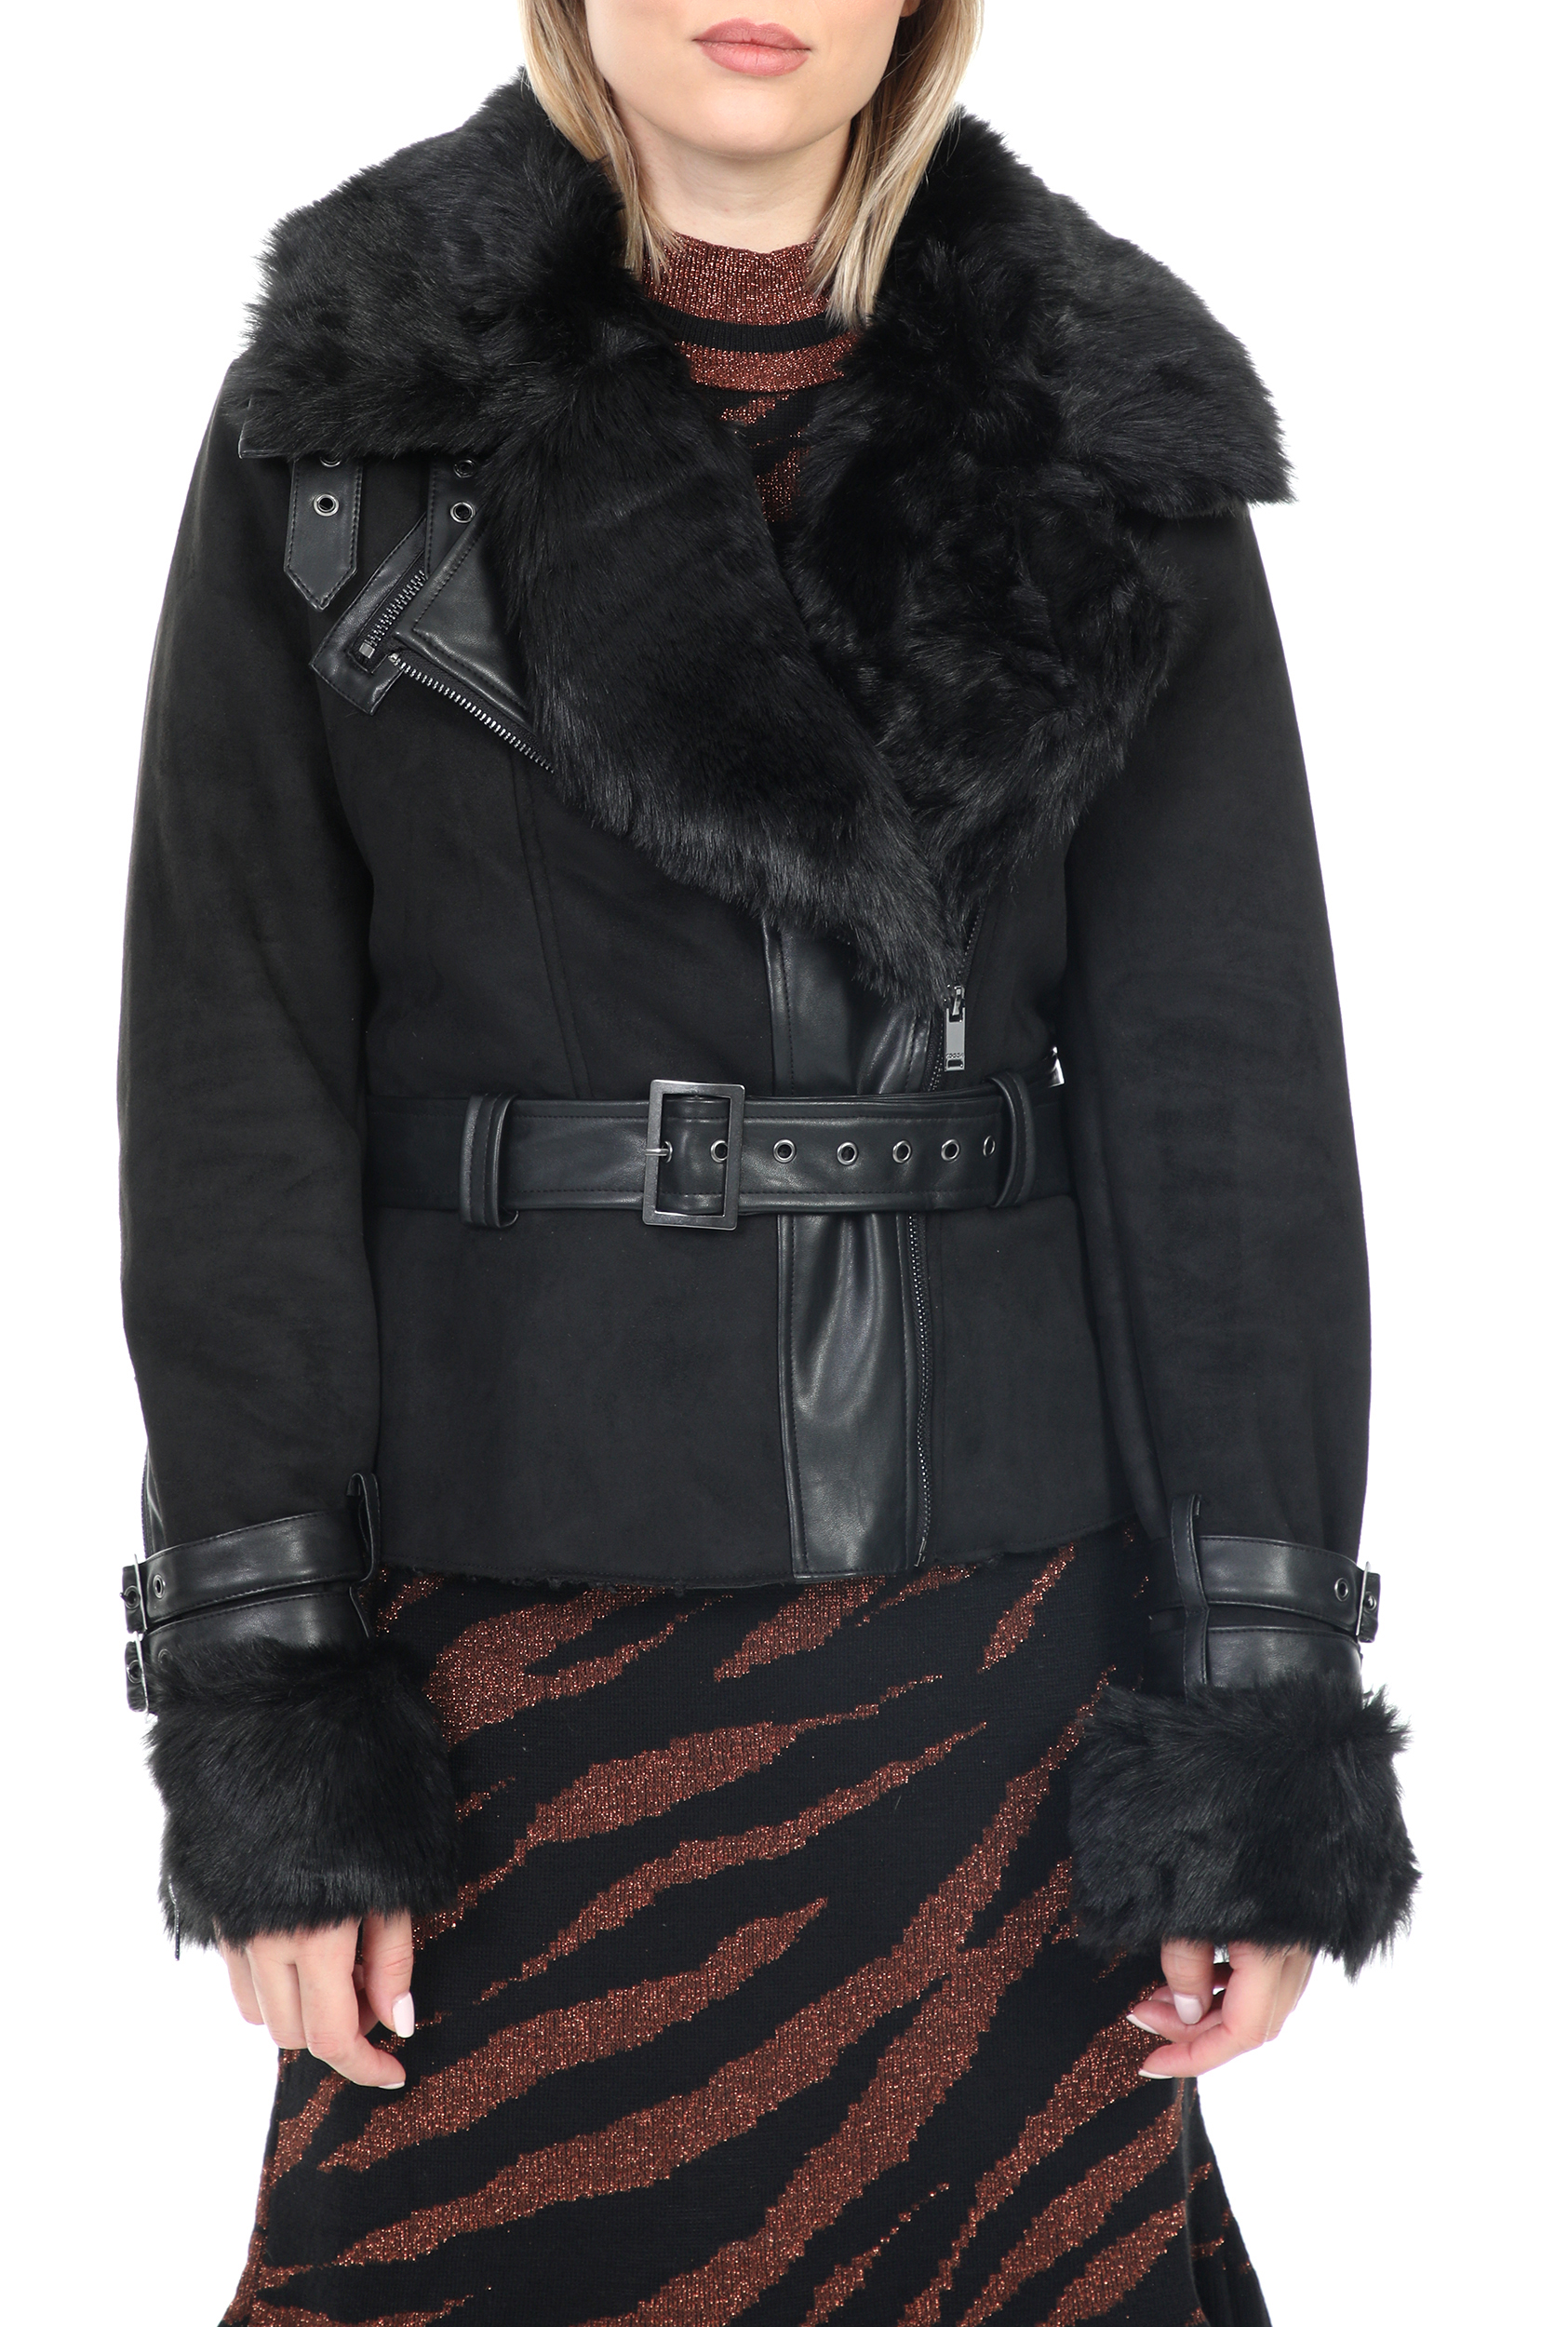 KOCCA – Γυναικείο jacket KOCCA TRACES μαύρο 1802659.0-0071